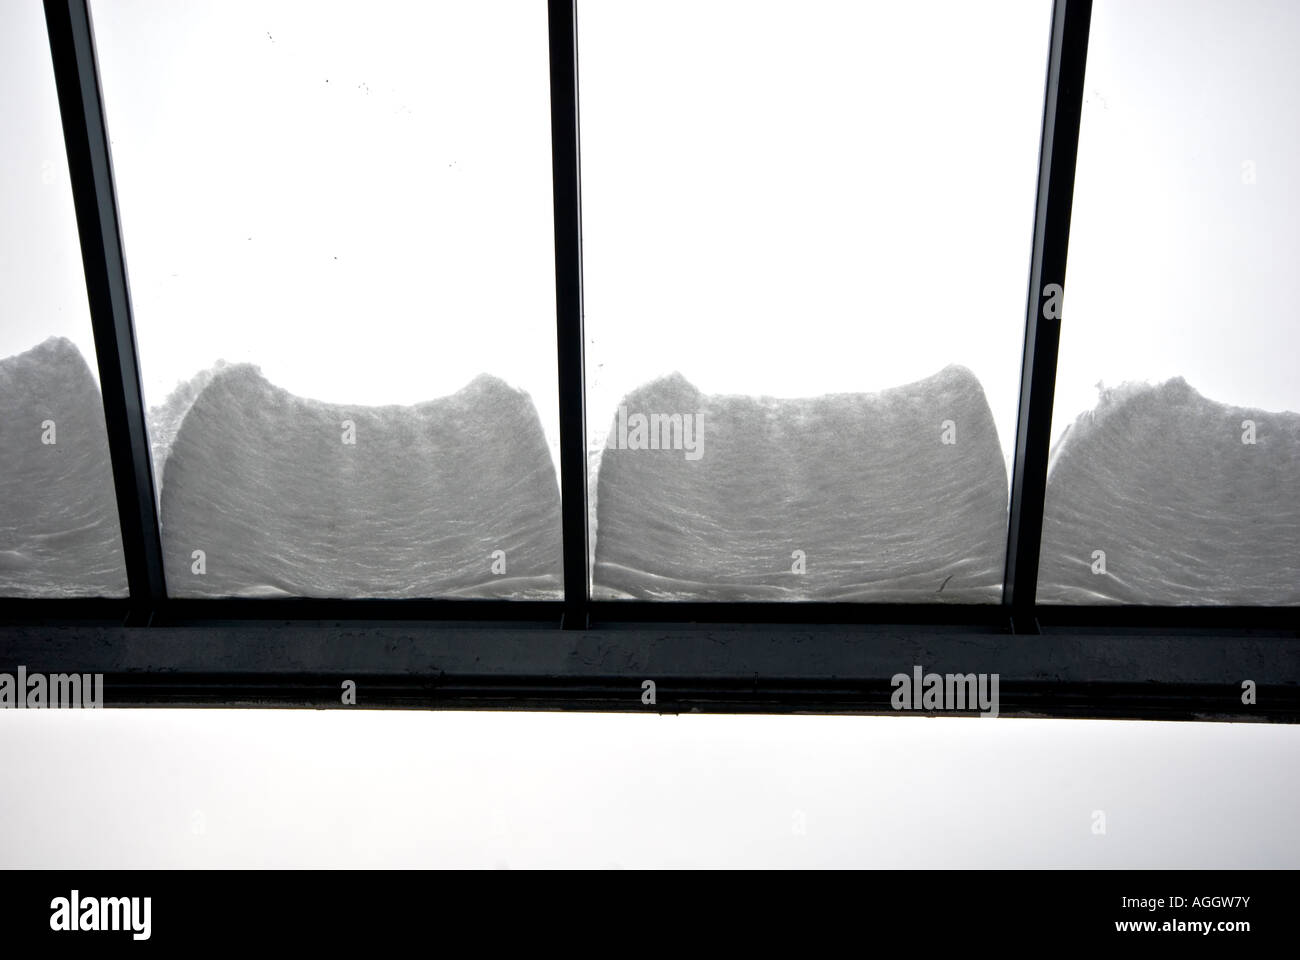 GLASS ROOF WINDOW SKY LIGHT UNDER BLANKET OF SNOW Stock Photo